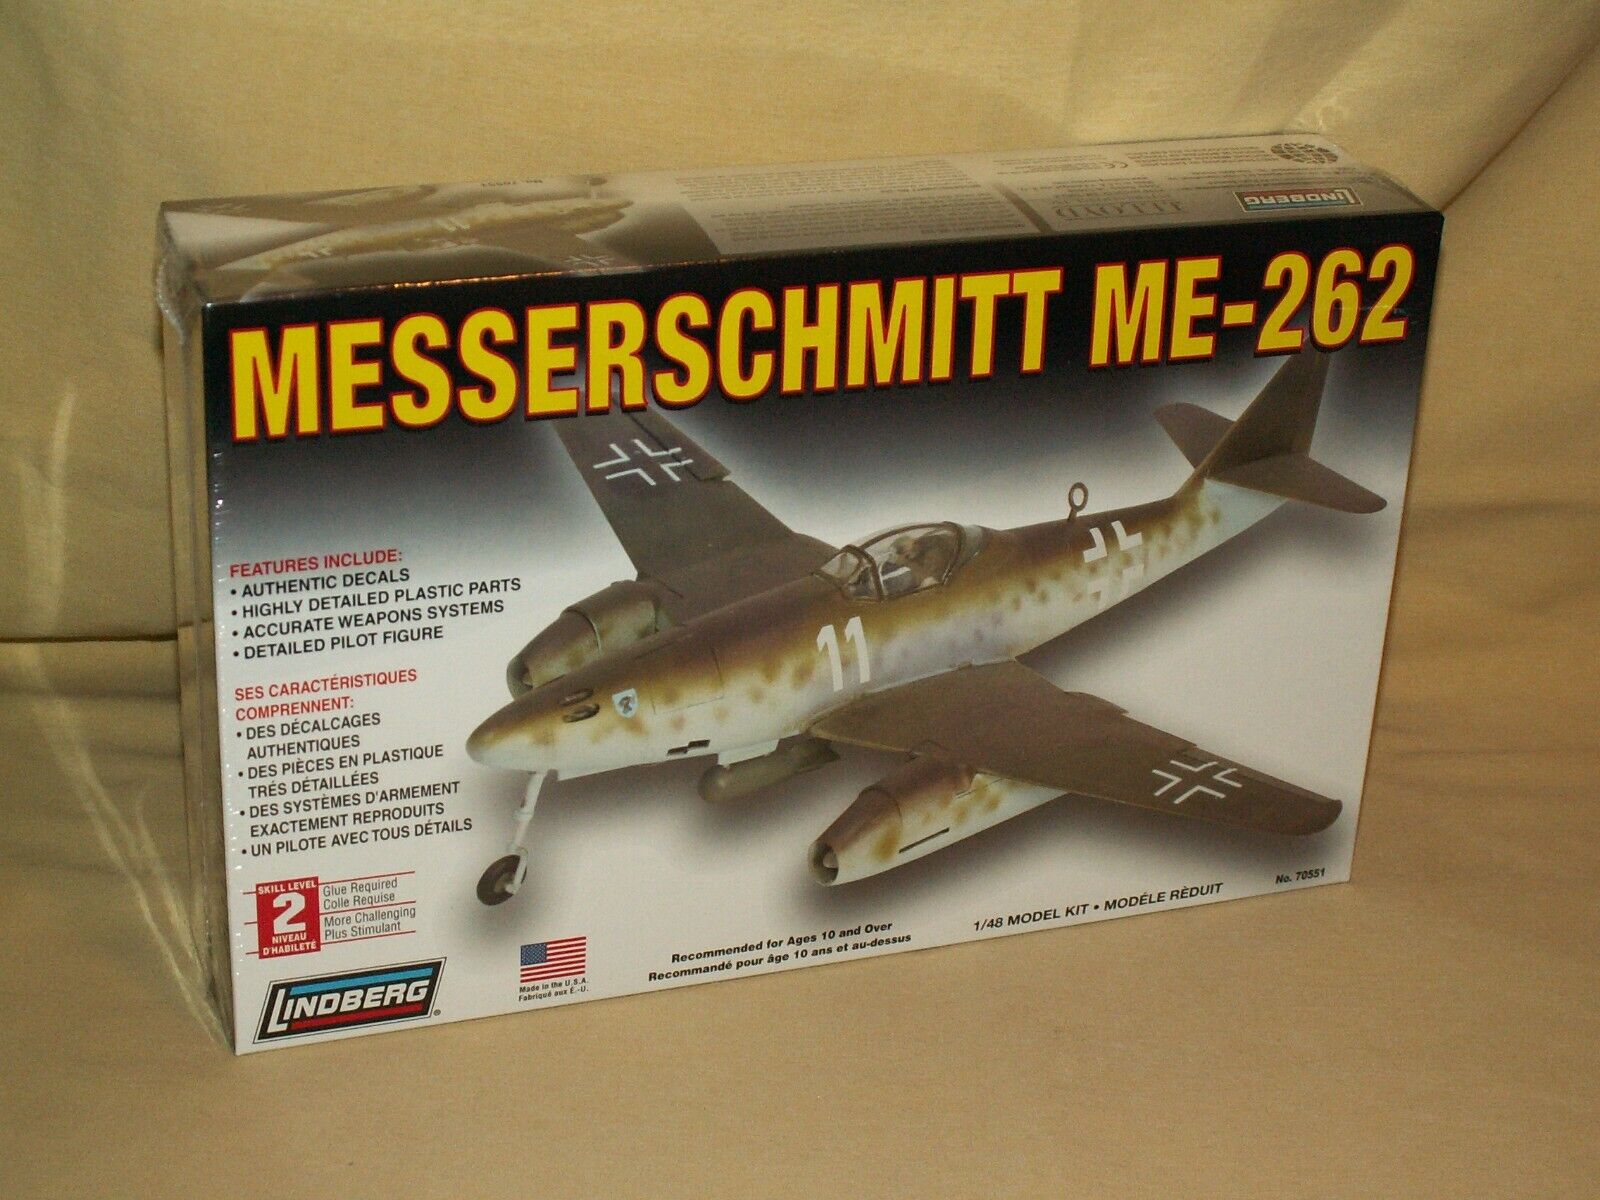 MESSERSCHMITT ME-262 LINDBERG AIRPLANE MODEL KIT NEW 2006 NO 70551 1/48 PLANE.